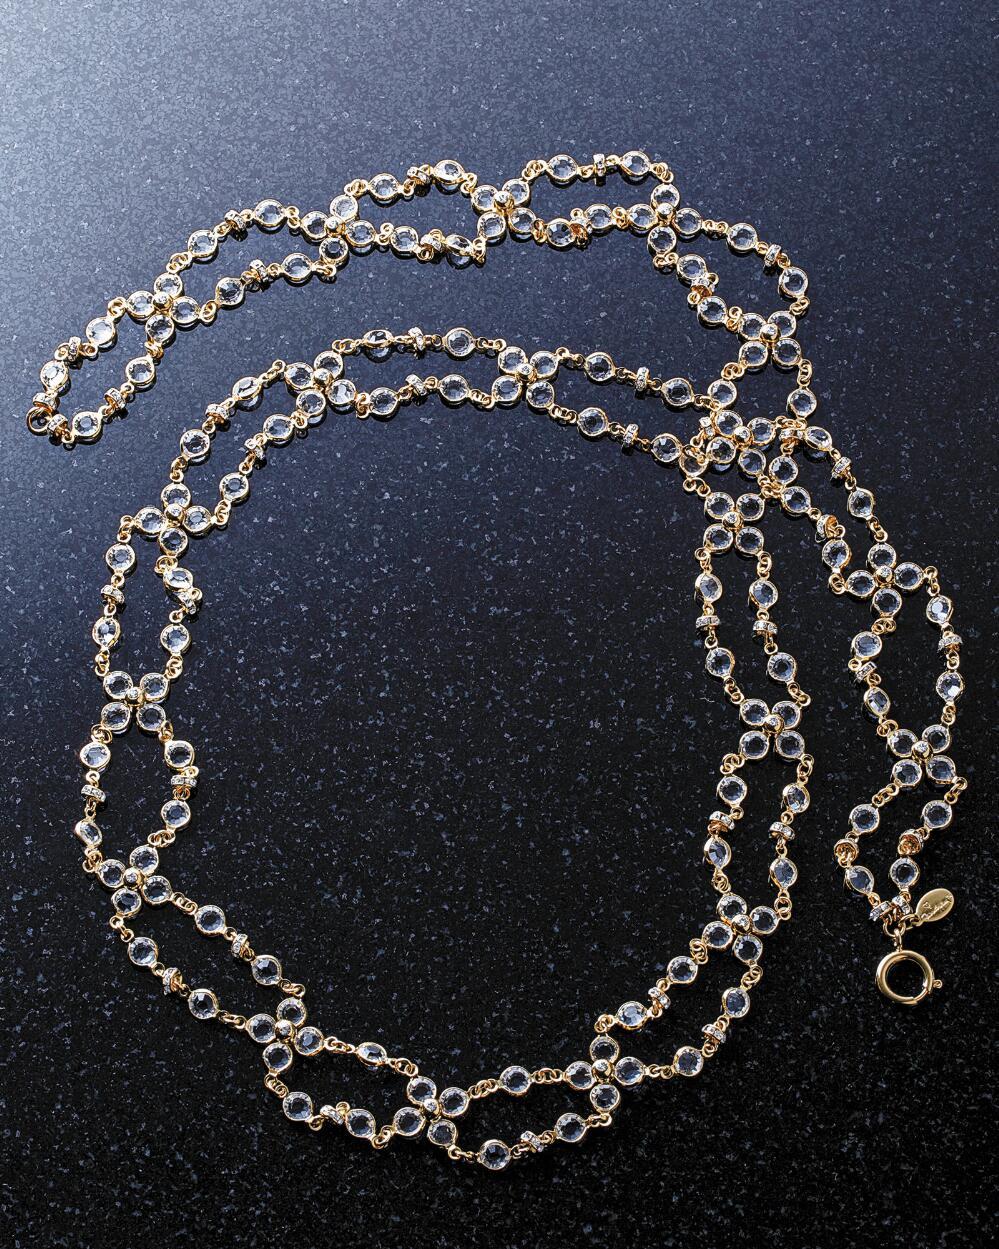 Smithsonian Audrey Hepburn Web Chain Necklace 37" - $74.99